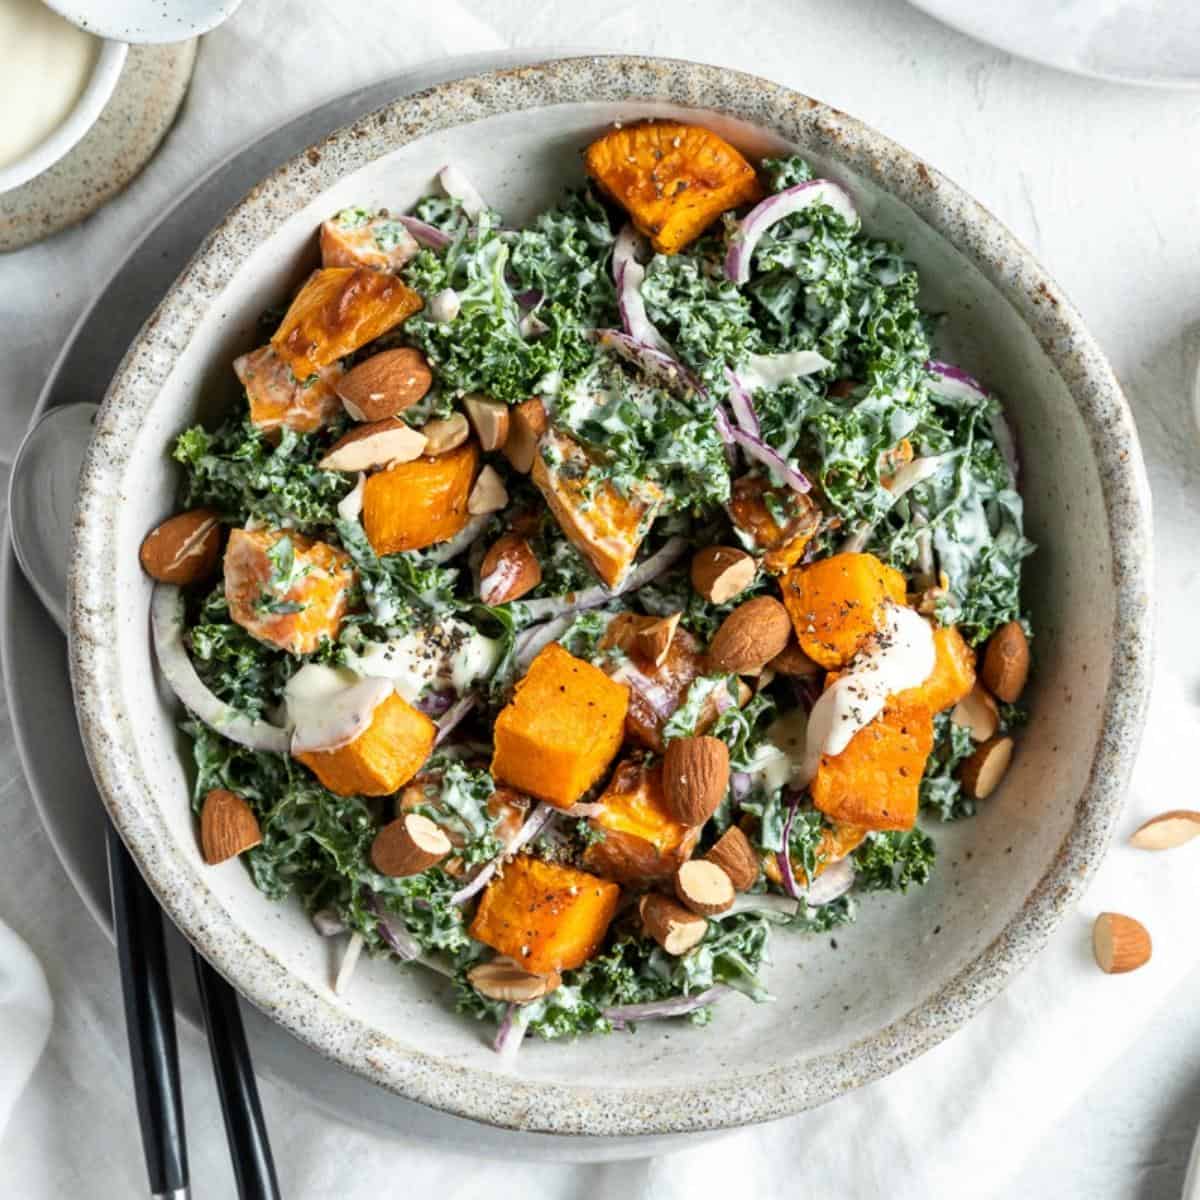 https://itsnotcomplicatedrecipes.com/wp-content/uploads/2021/12/Kale-and-Sweet-Potato-Salad-Feature.jpg